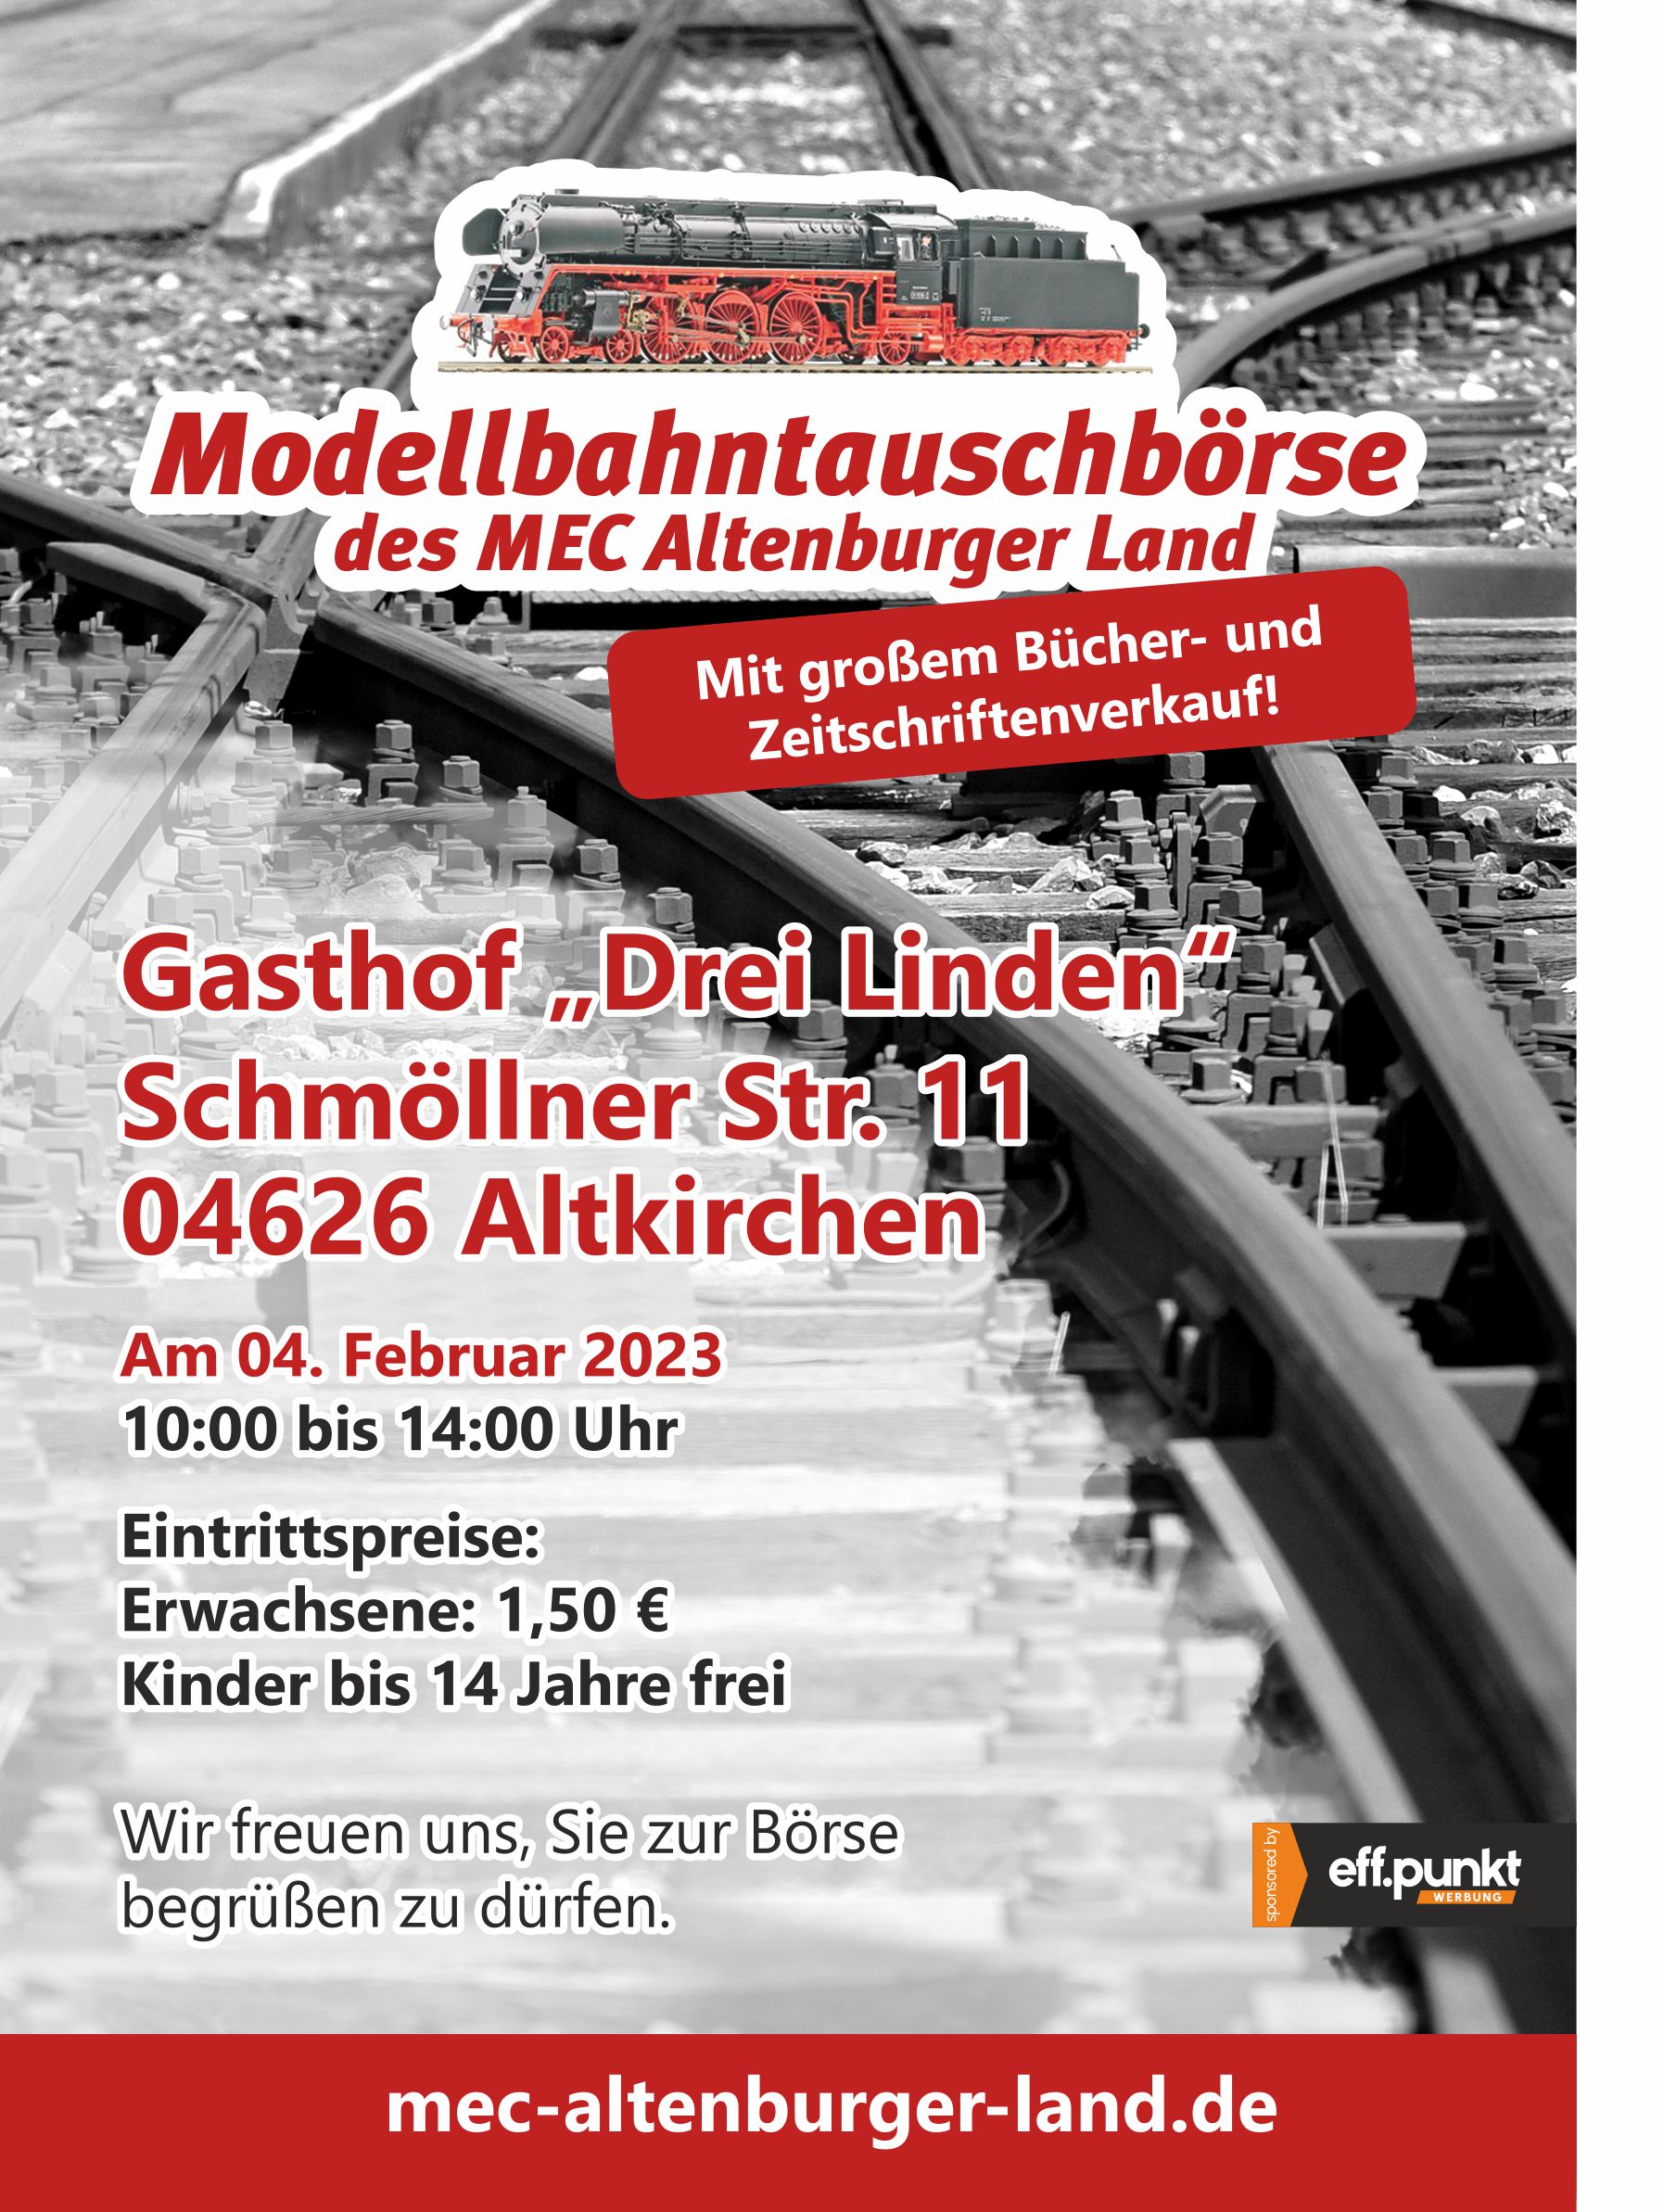 Modellbahnbörse des MEC Altenburger Land eV